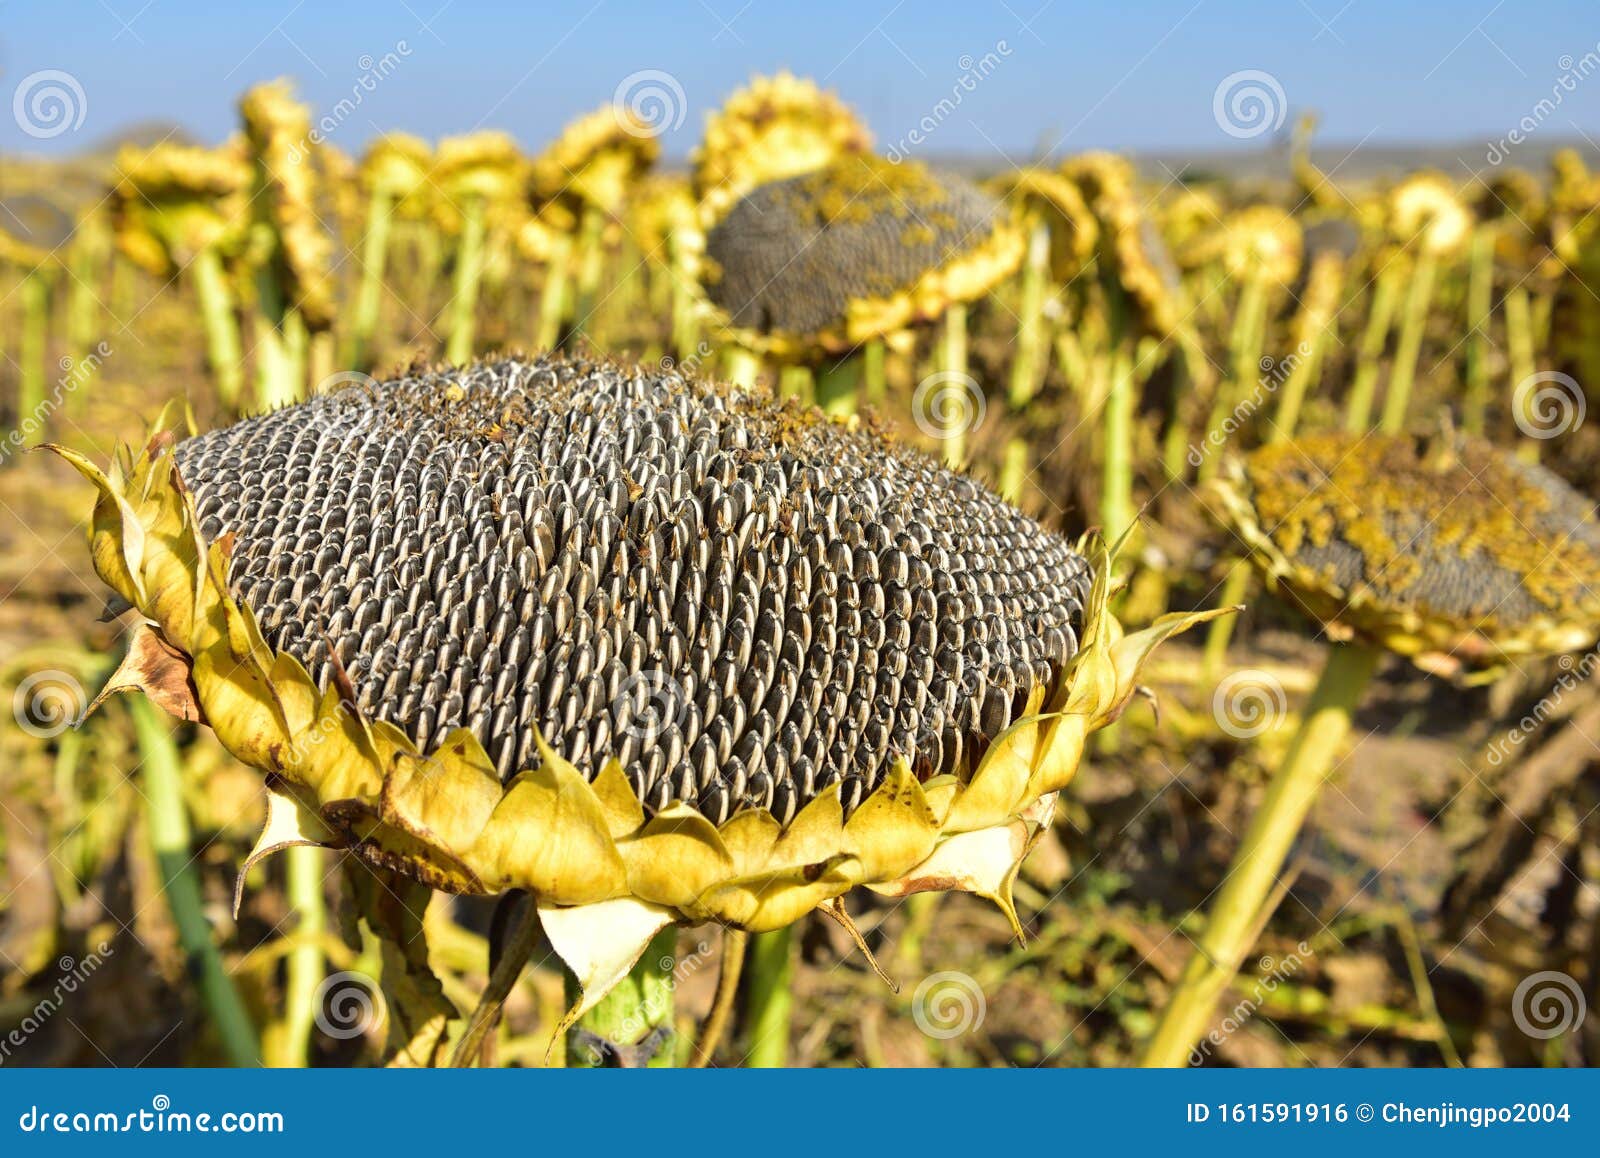 Mature sunflower seeds stock photo. Image of harvest - 161591916